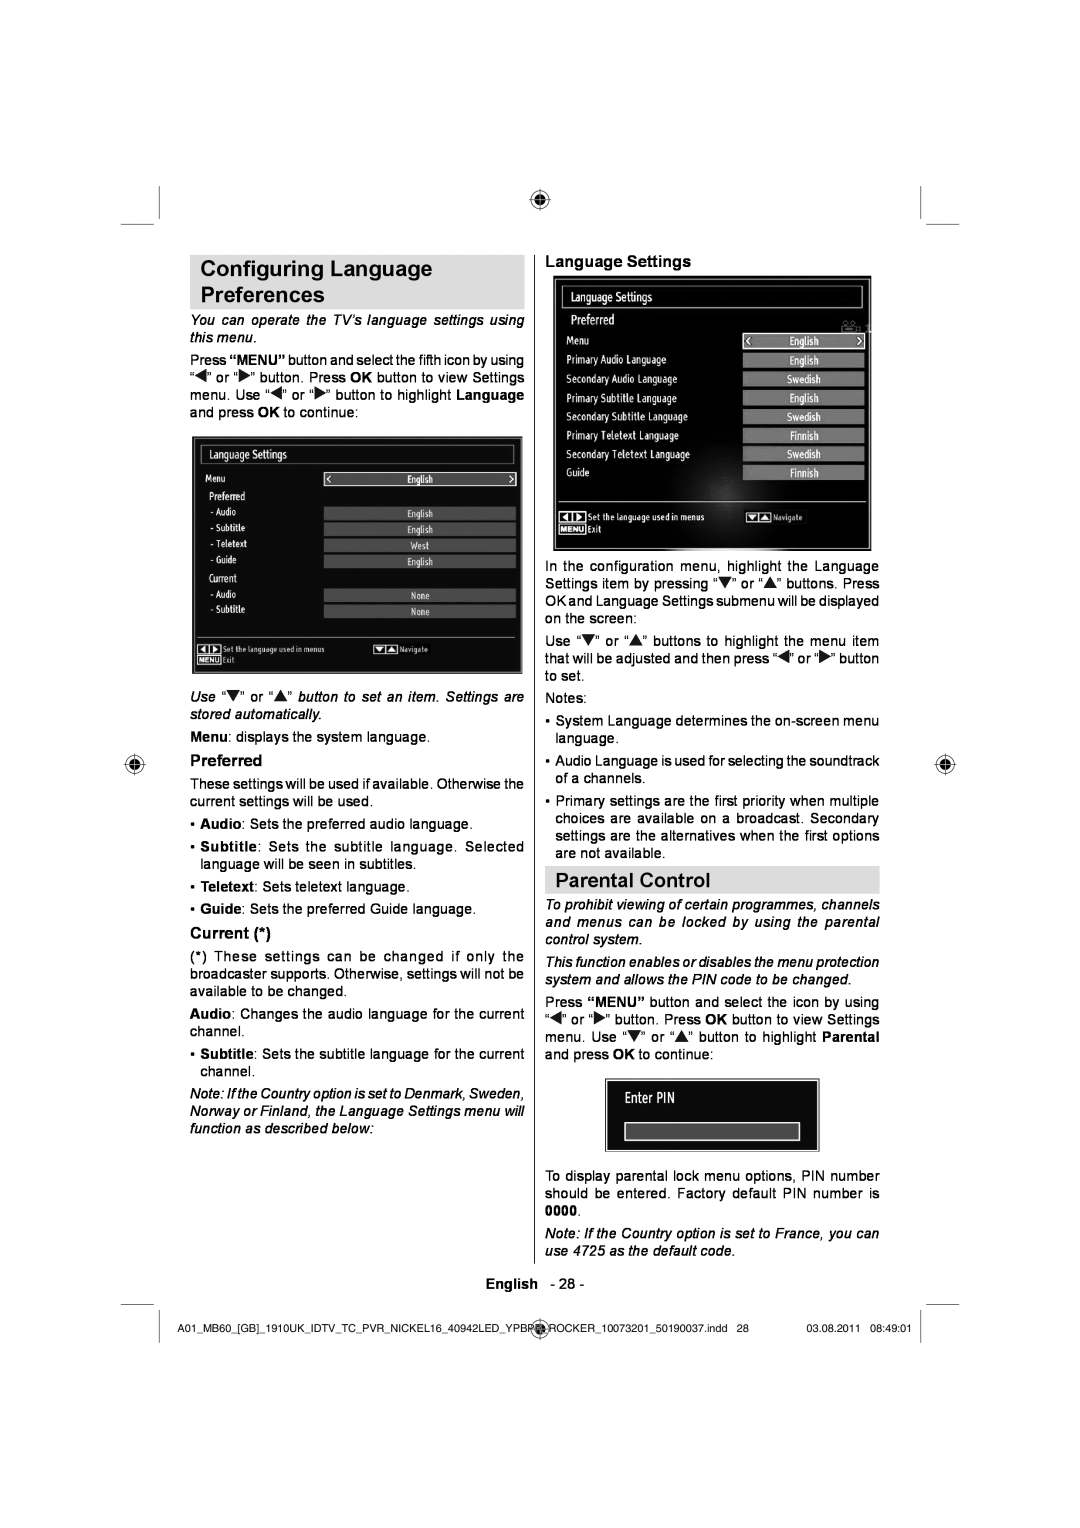 Sharp LC-40LE510E Conﬁguring Language Preferences, Parental Control, Preferred, Current, Language Settings, English 